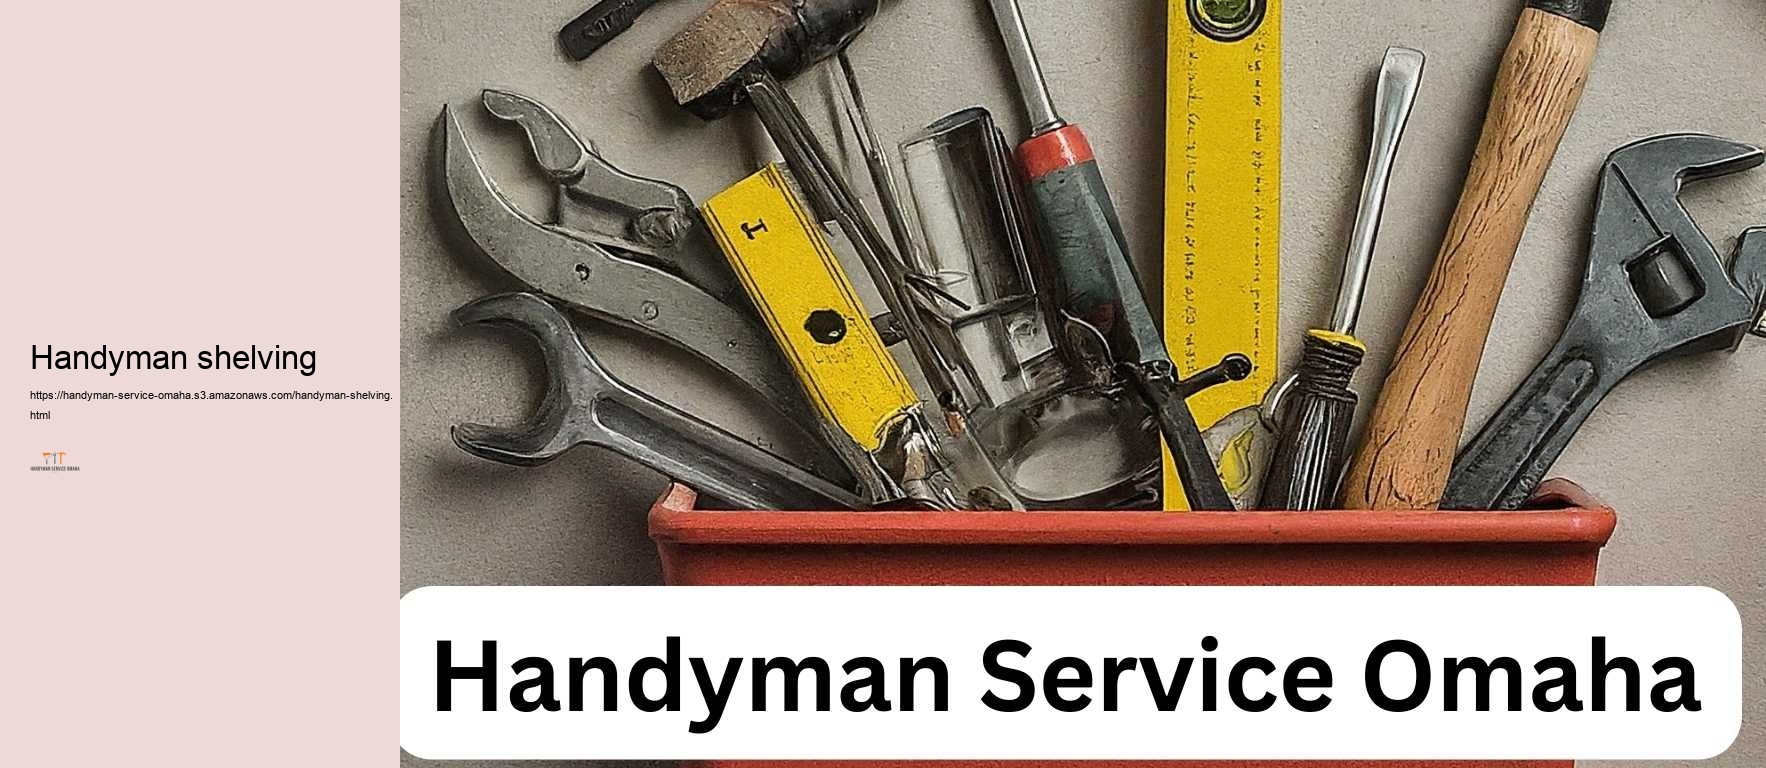 Handyman shelving